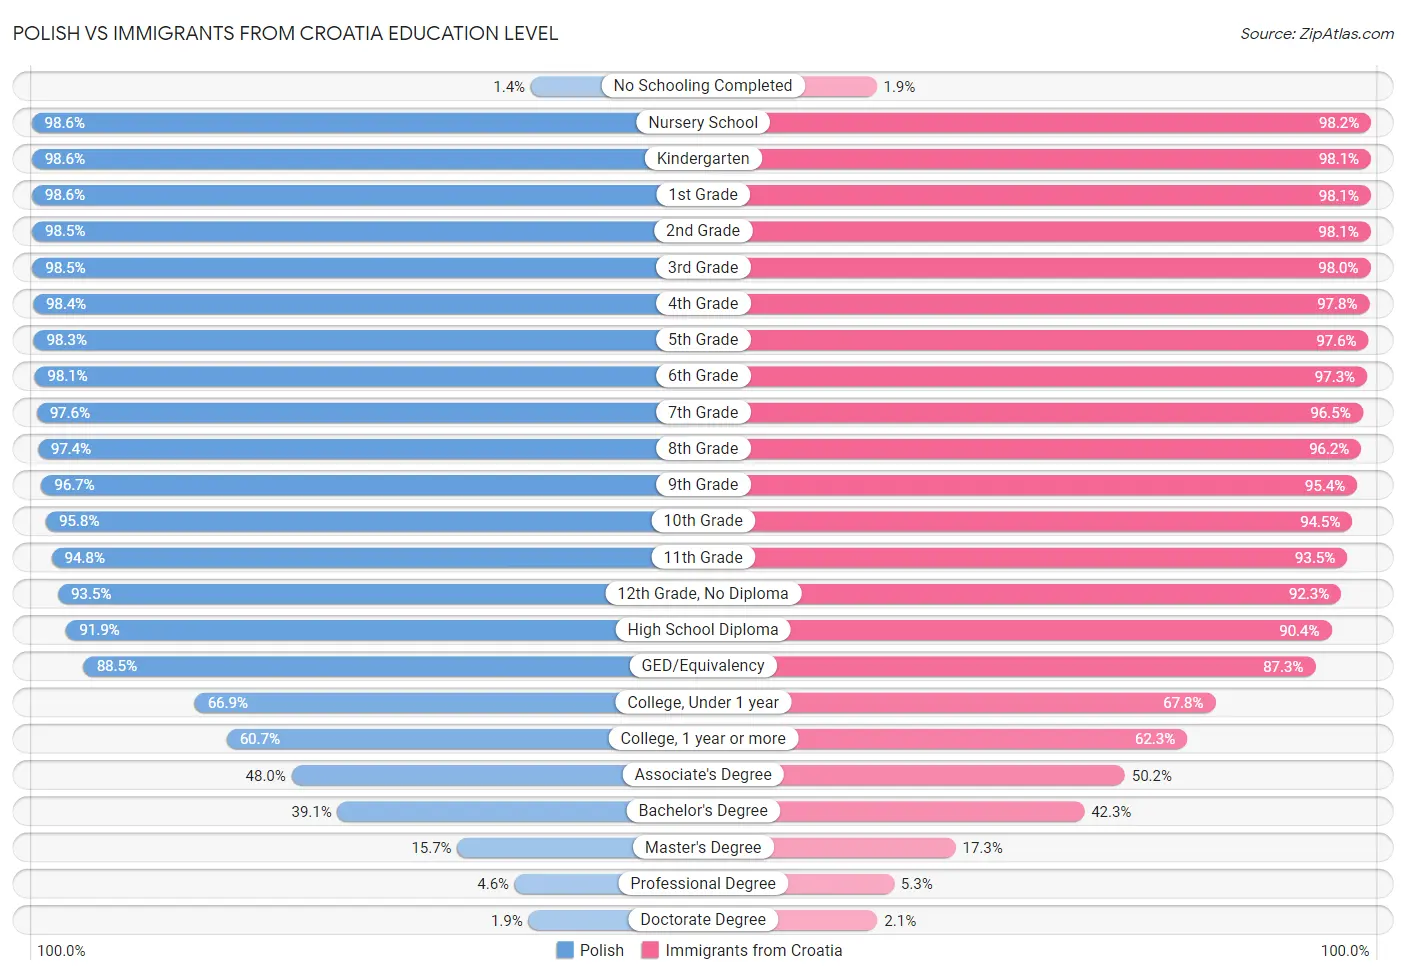 Polish vs Immigrants from Croatia Education Level